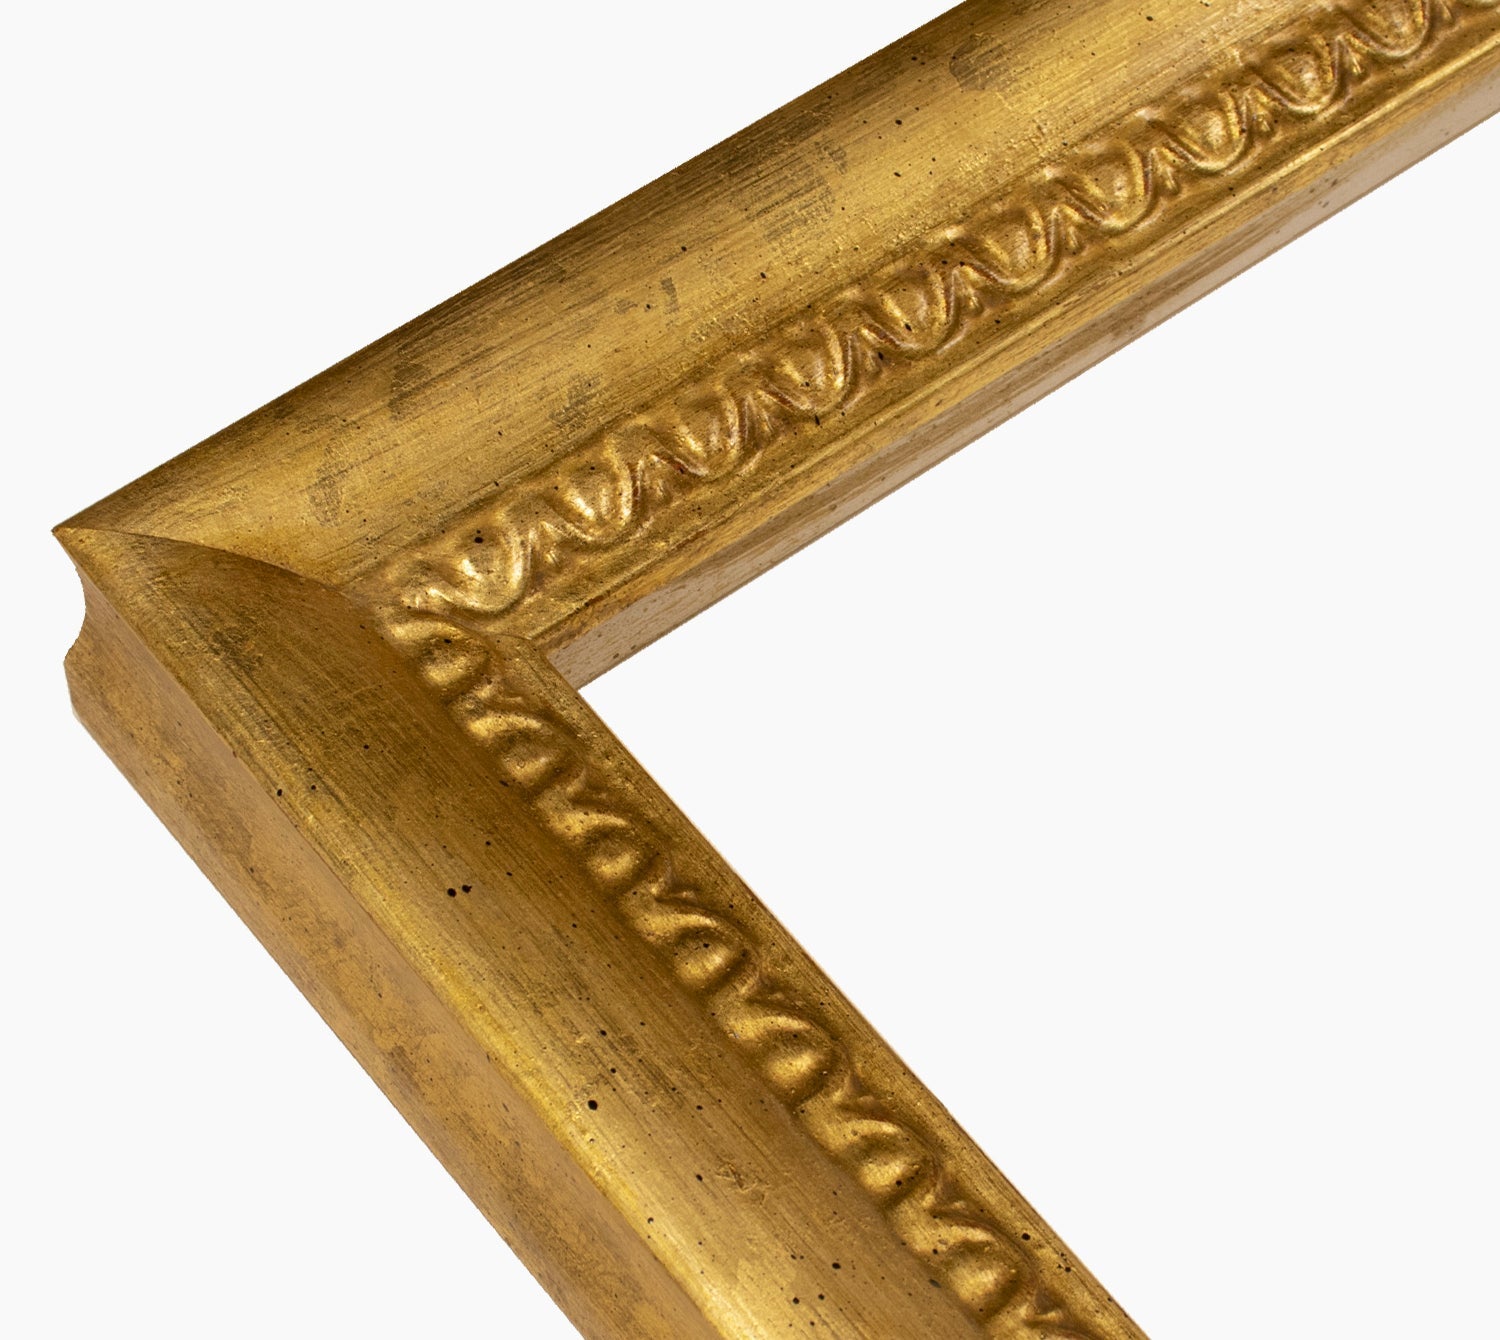 228.010 cadre en bois à la feuille d'or mesure de profil 45x45 mm Lombarda cornici S.n.c.